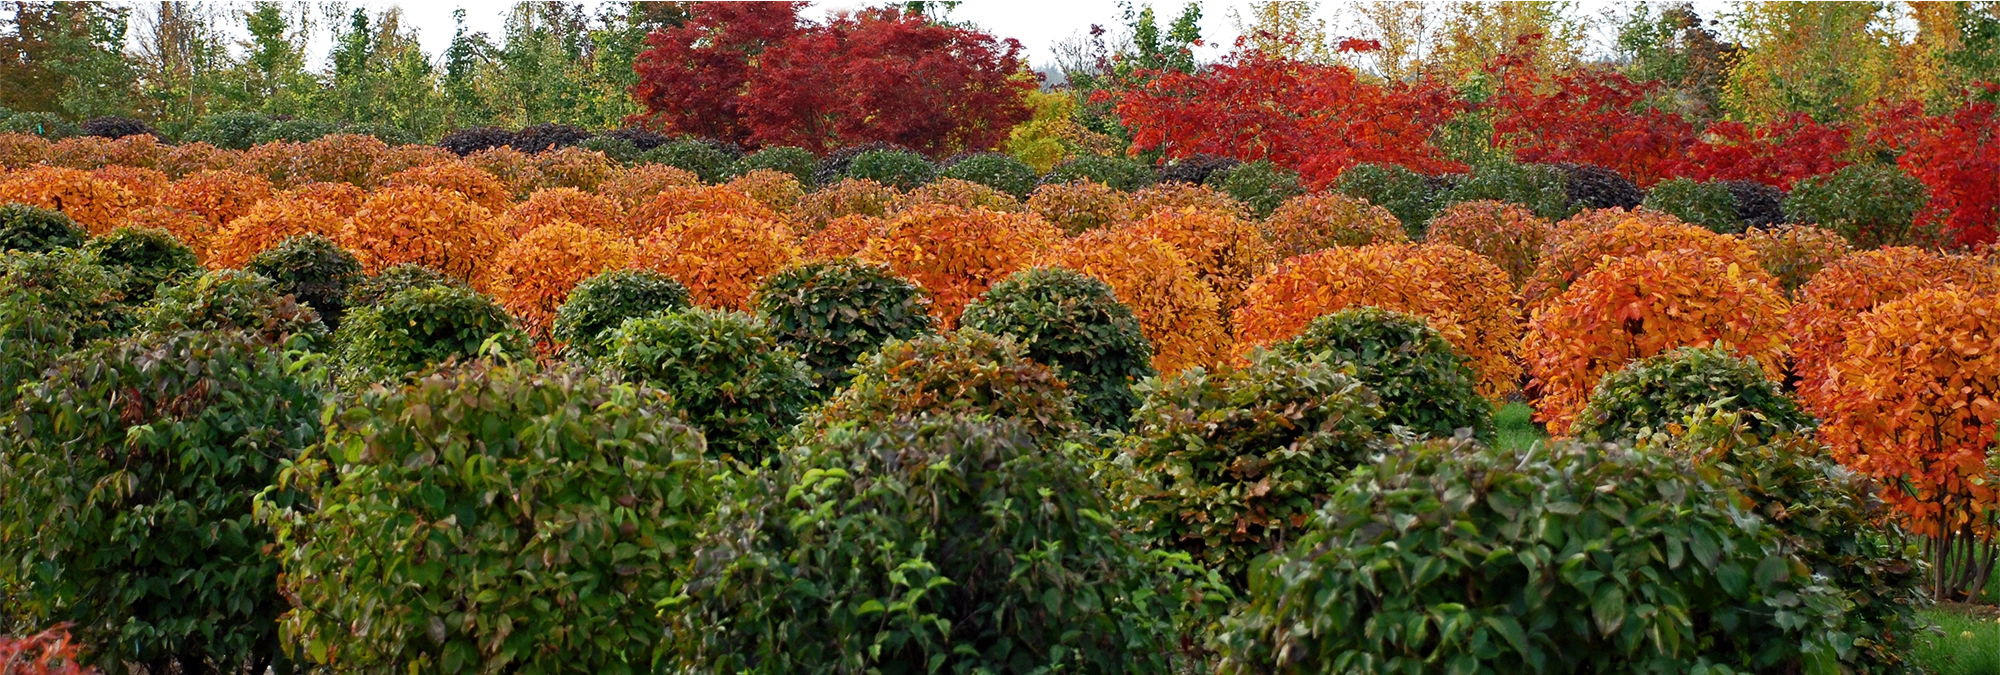 Viele Kugelbäume im Herbst